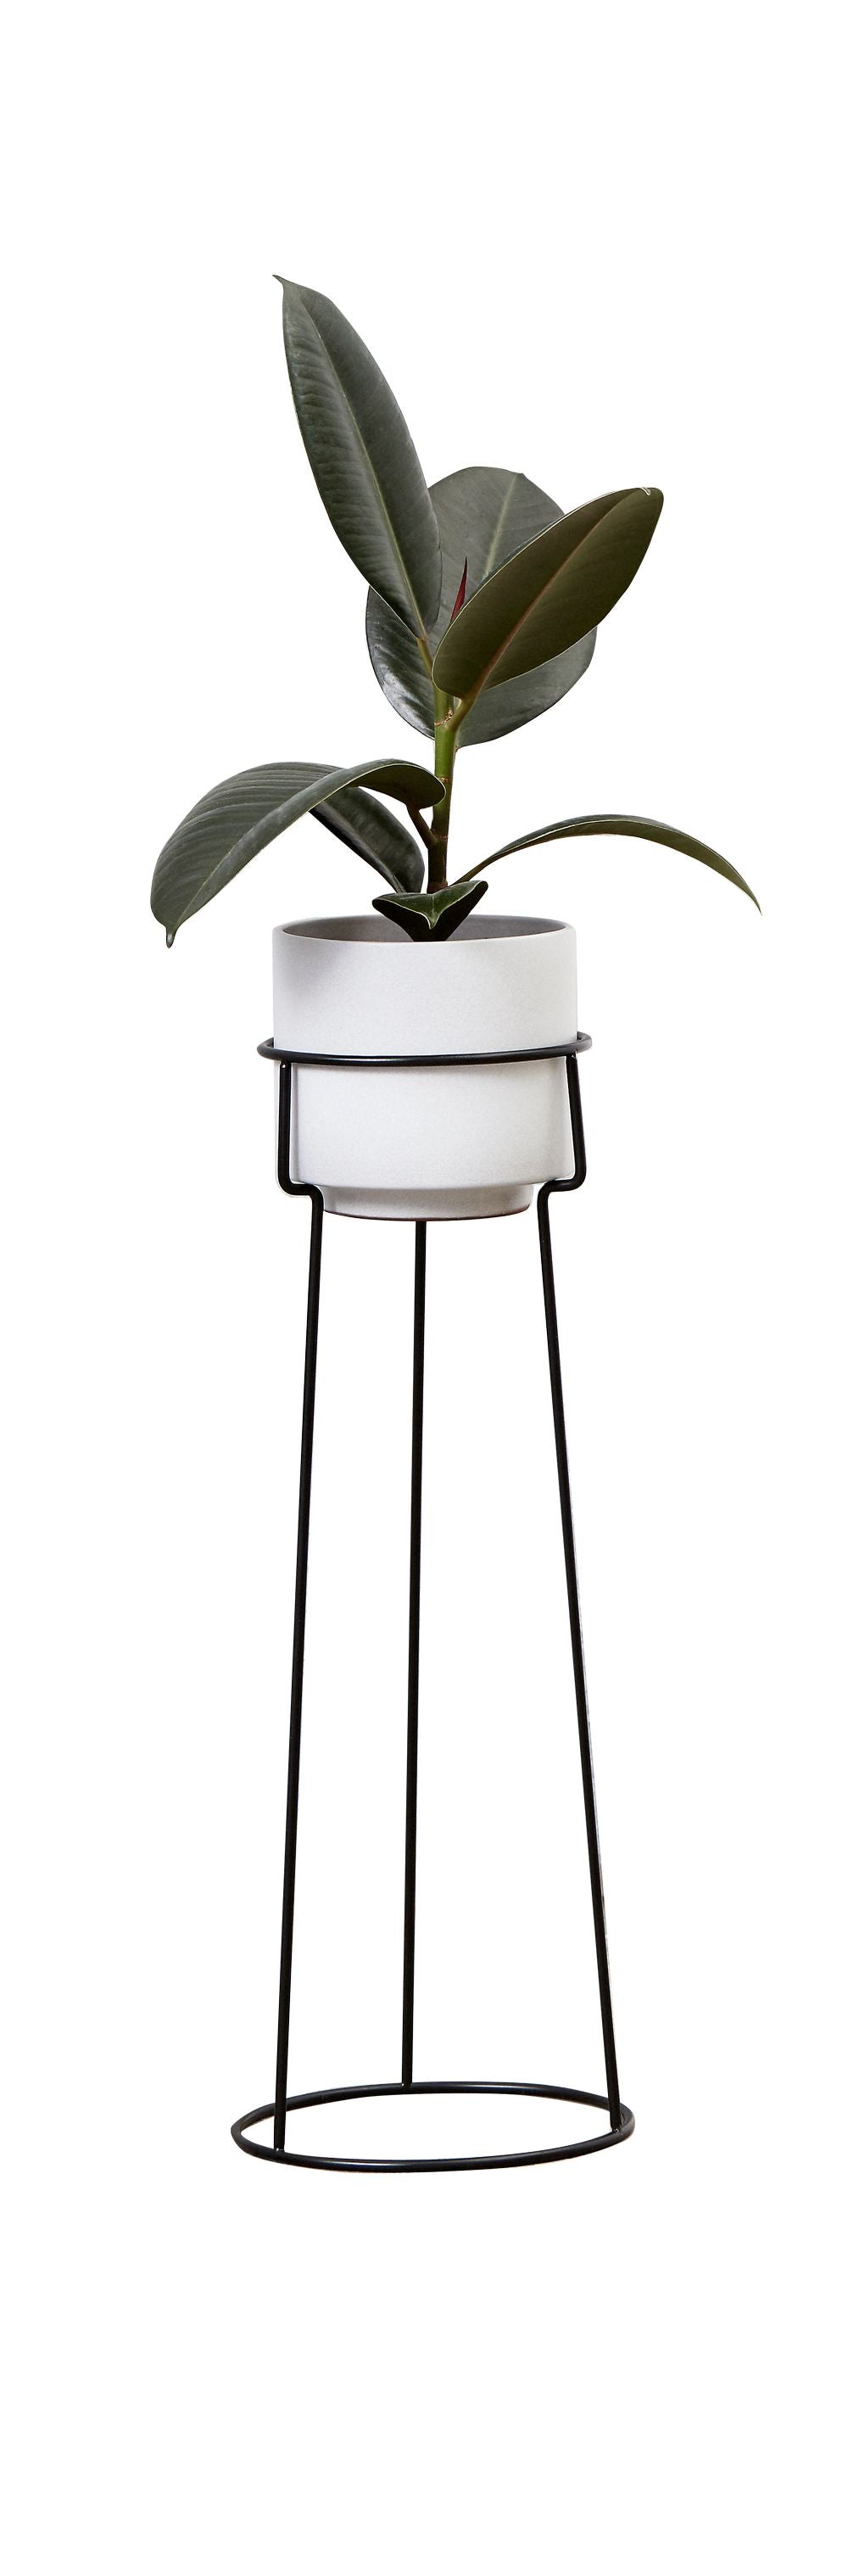 Andersen Furniture A Plant Flowerpot Hxø 12x13,3 Cm, Grey